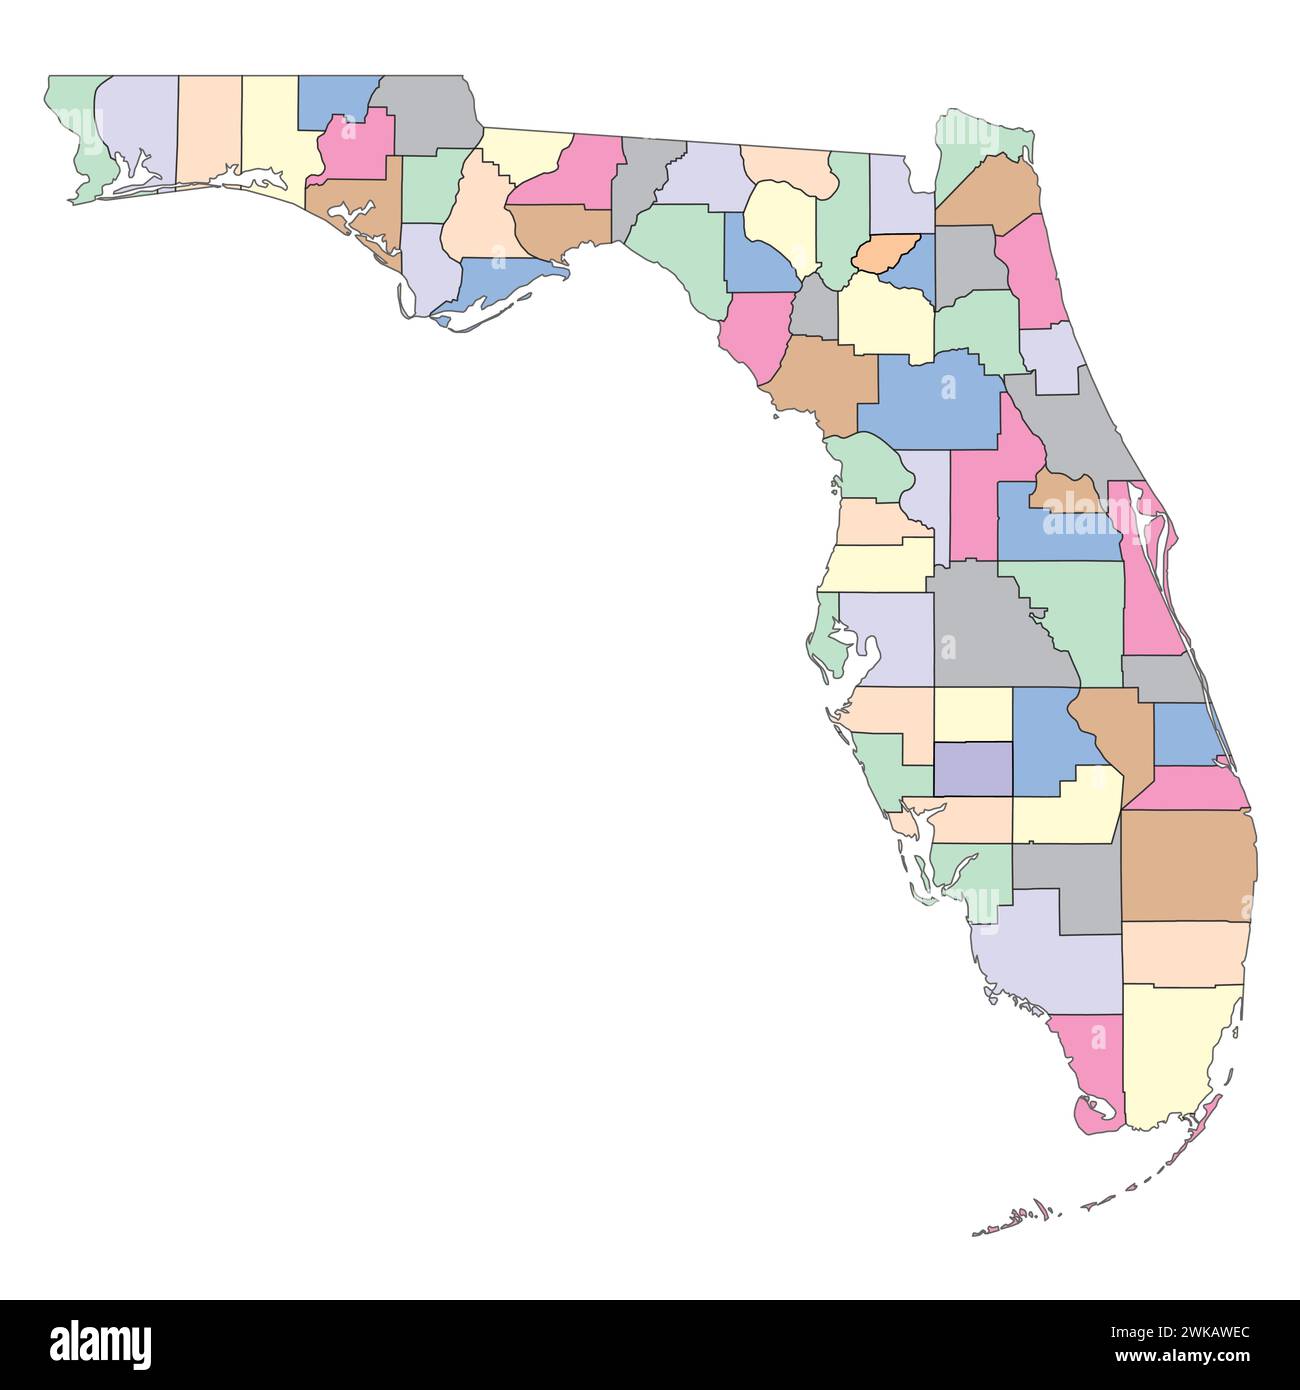 Editierbare Vektordatei des Bundesstaates Florida mit Countys. Stock Vektor